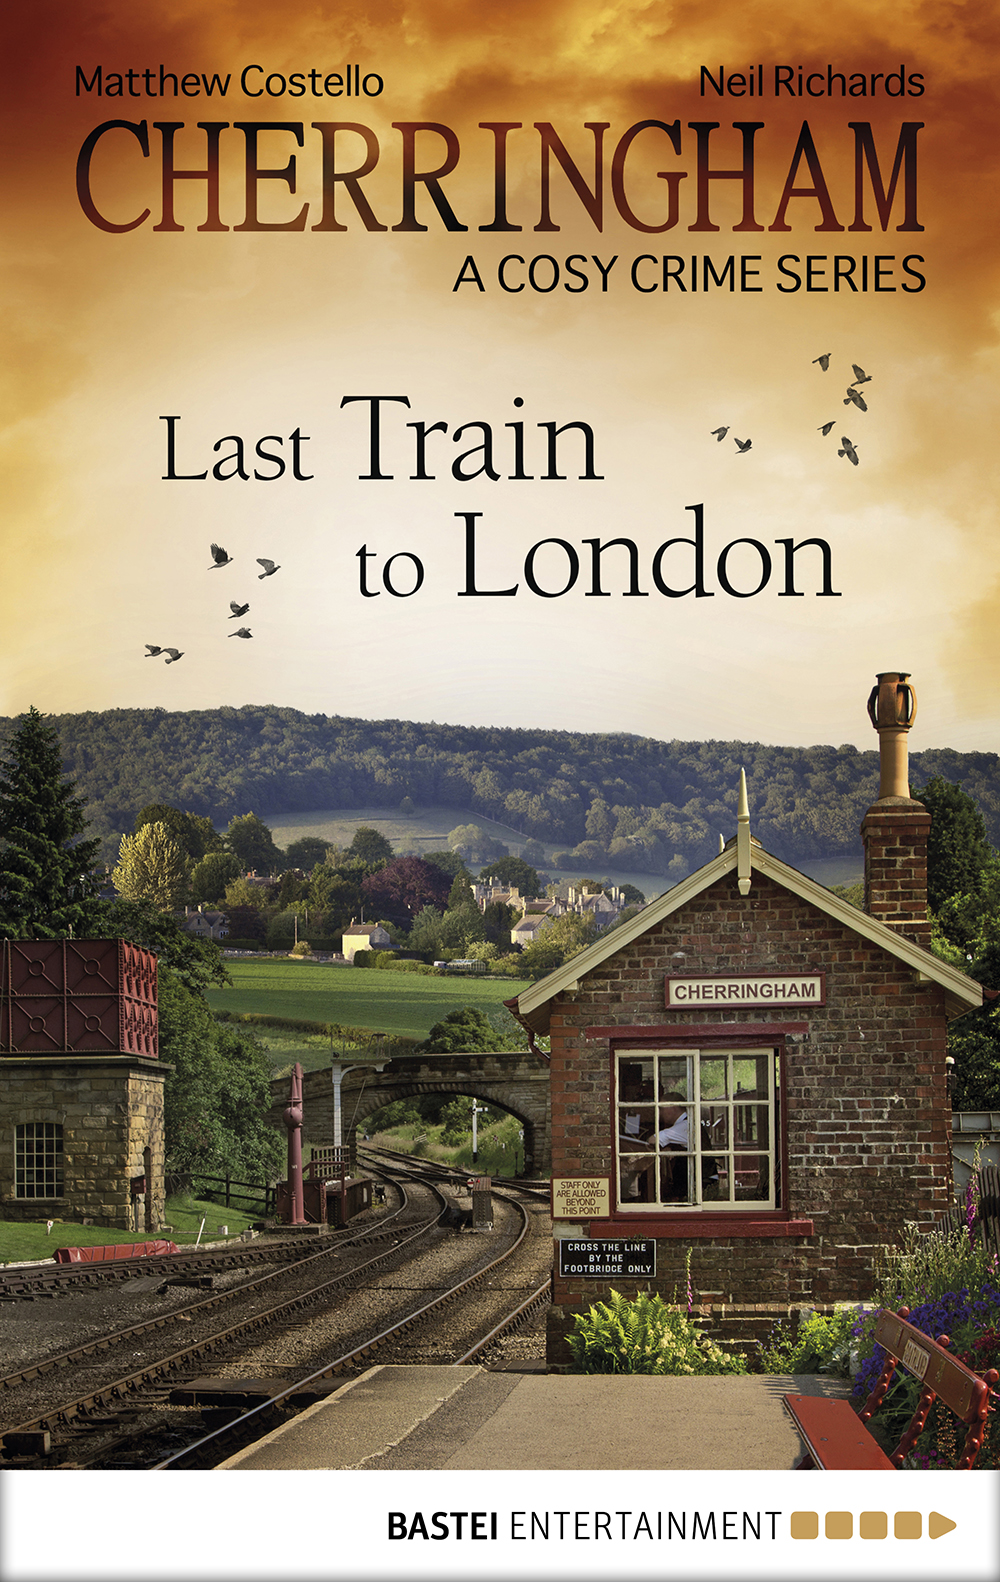 Cherringham--Last Train to London (2015) by Neil Richards